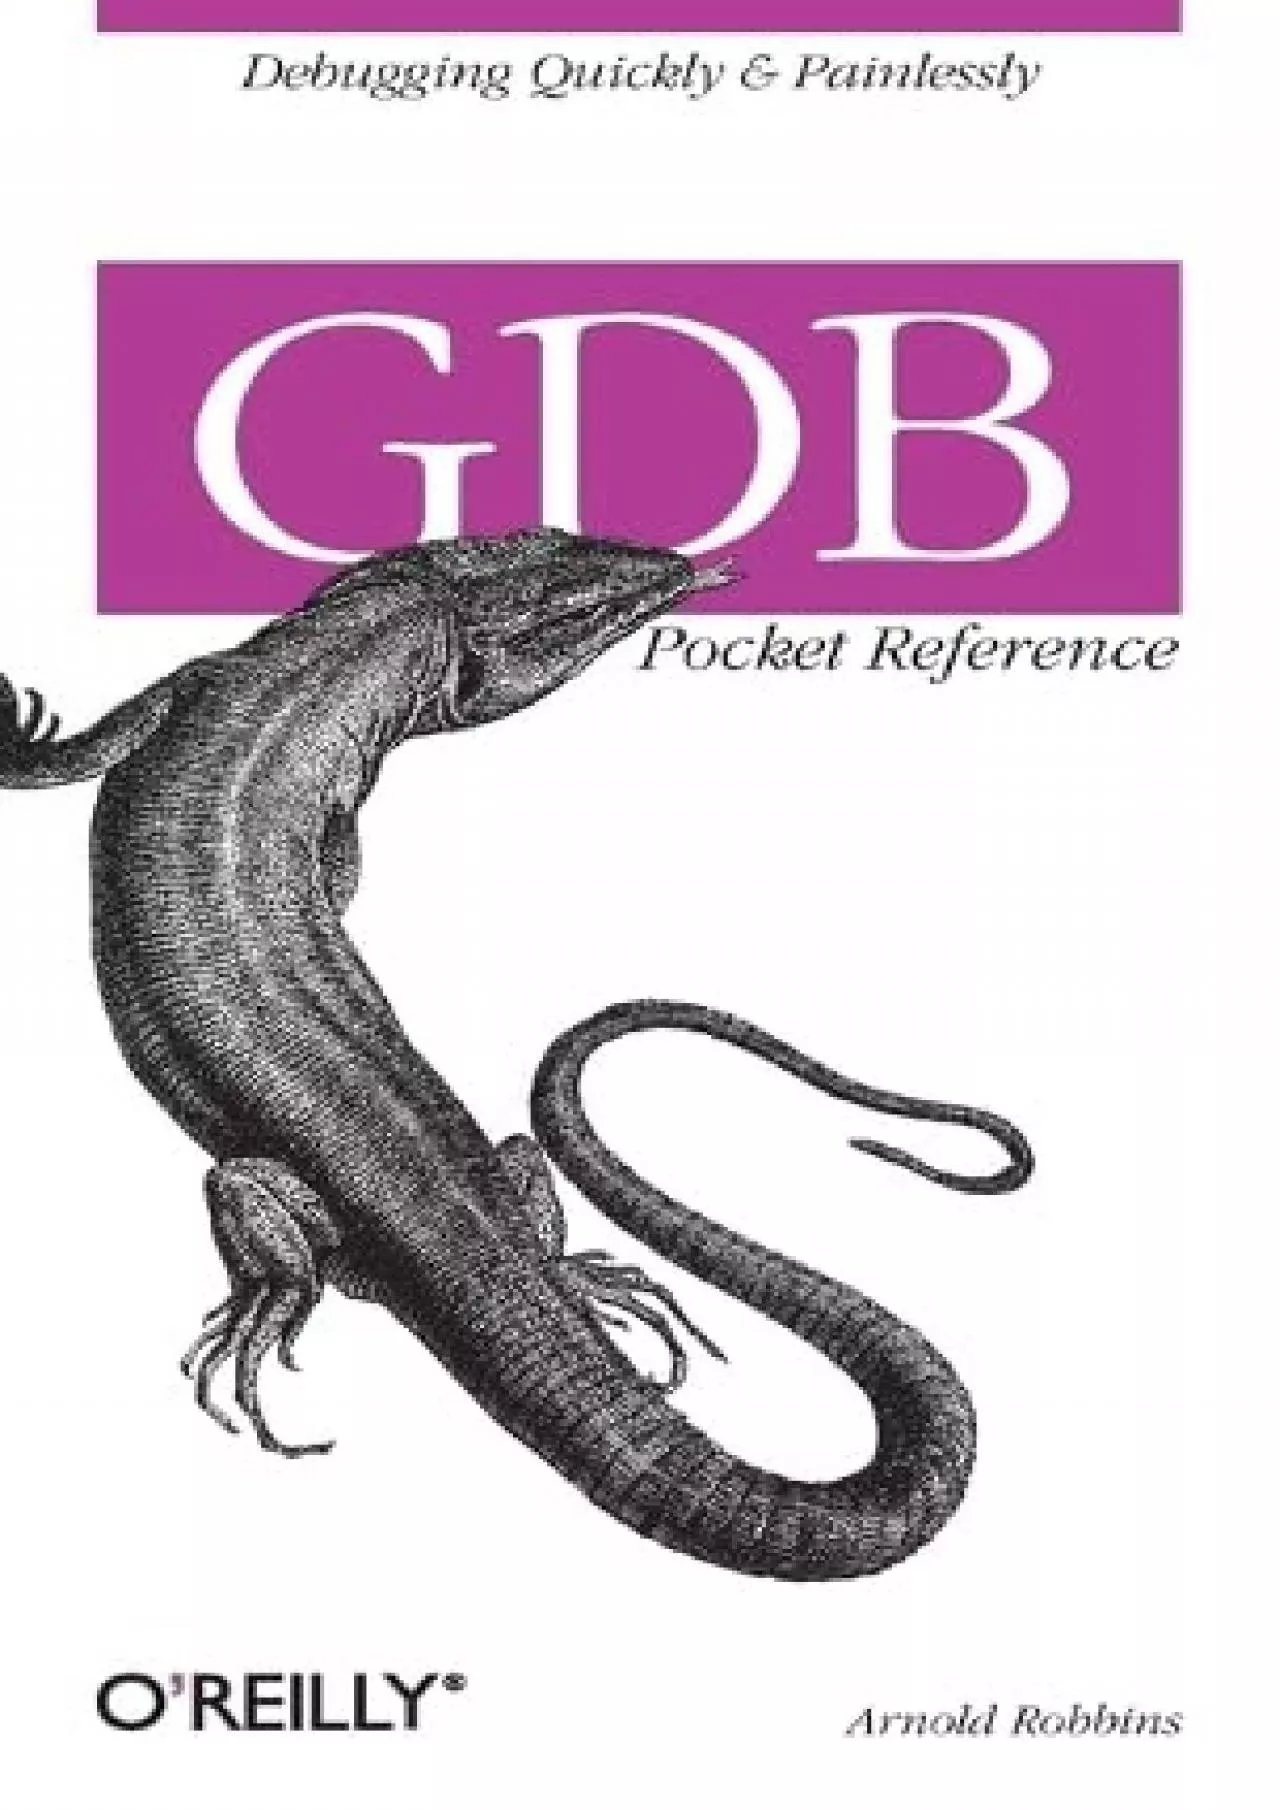 [eBOOK]-GDB Pocket Reference: Debugging Quickly  Painlessly with GDB (Pocket Reference